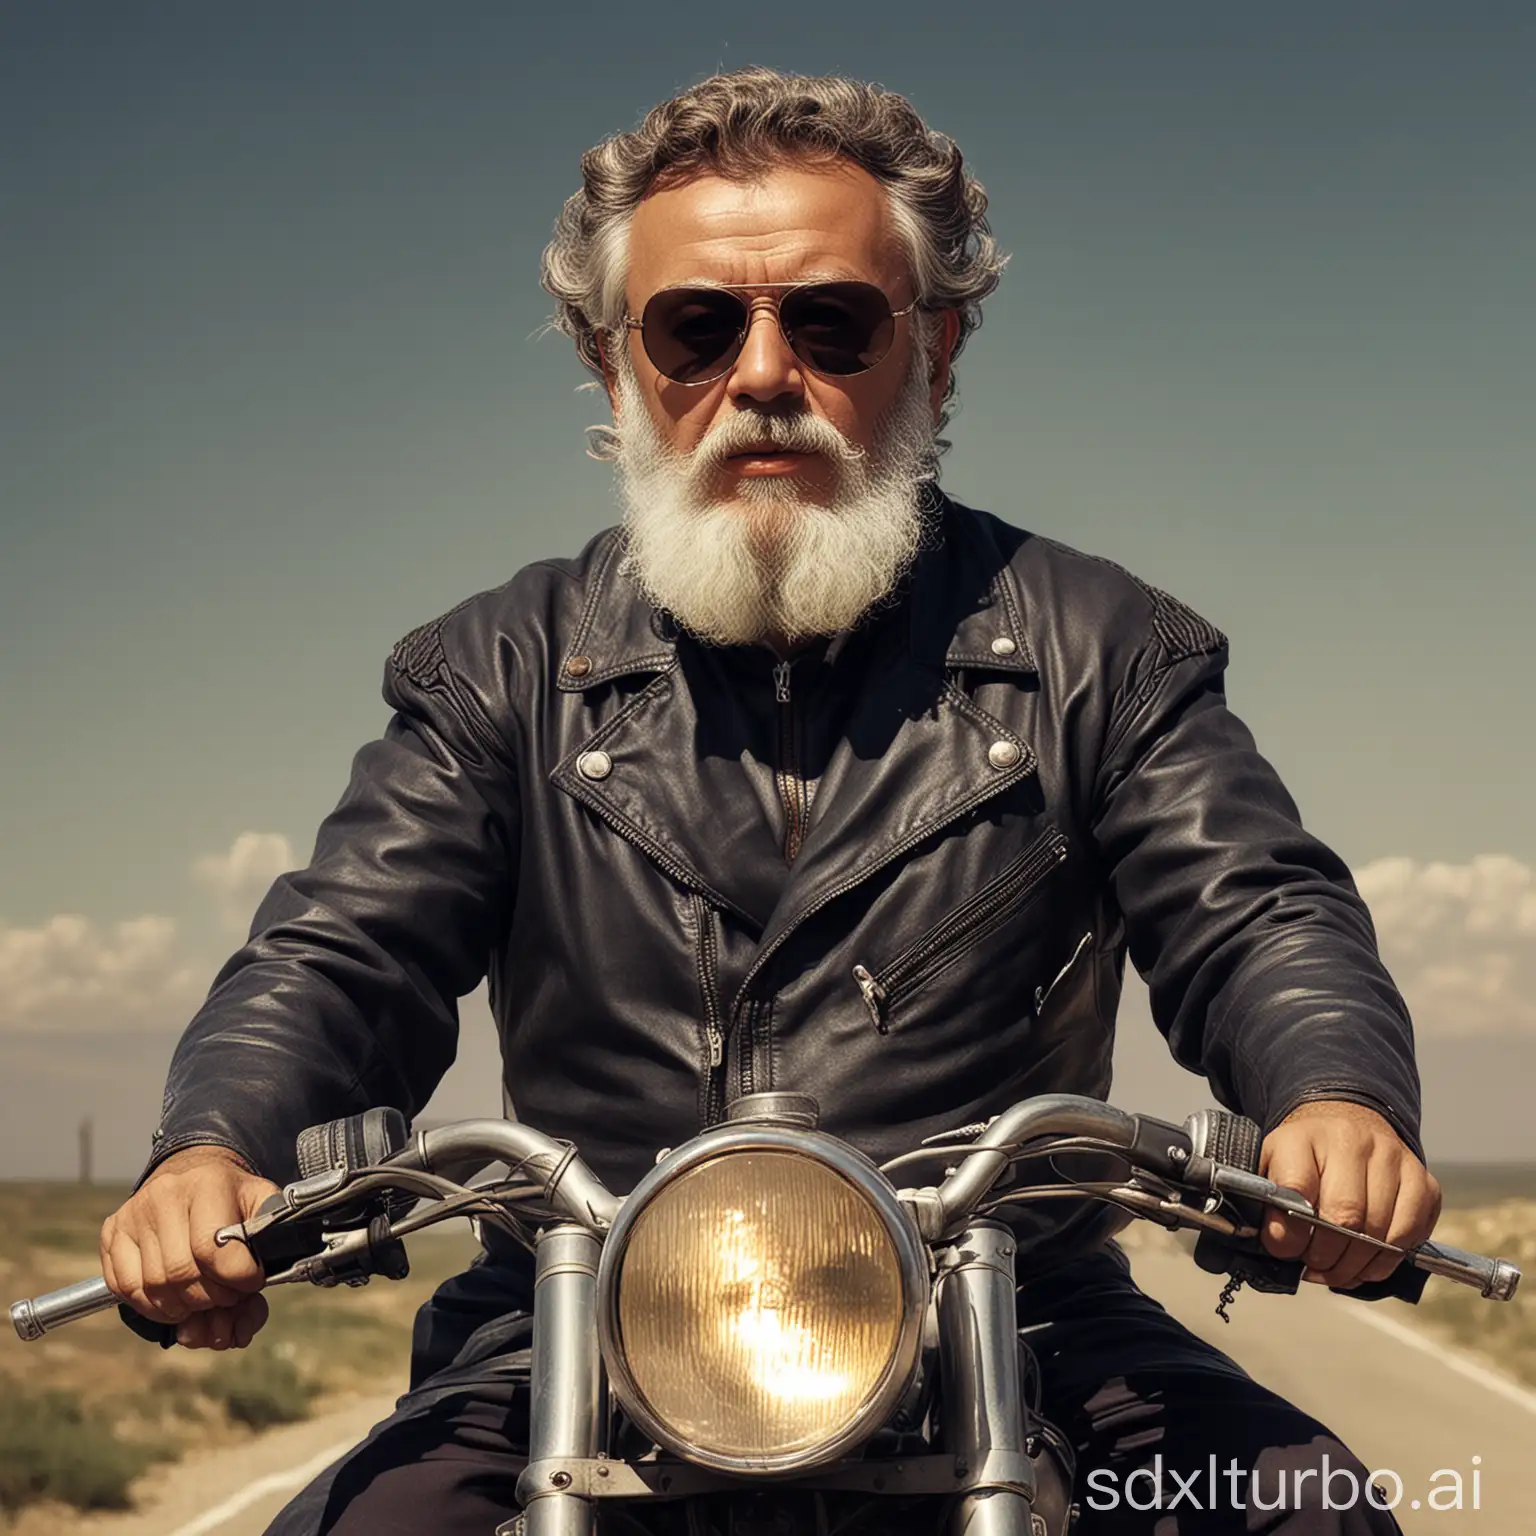 Galileo Galilei wearing sunglasses riding a motorcycle